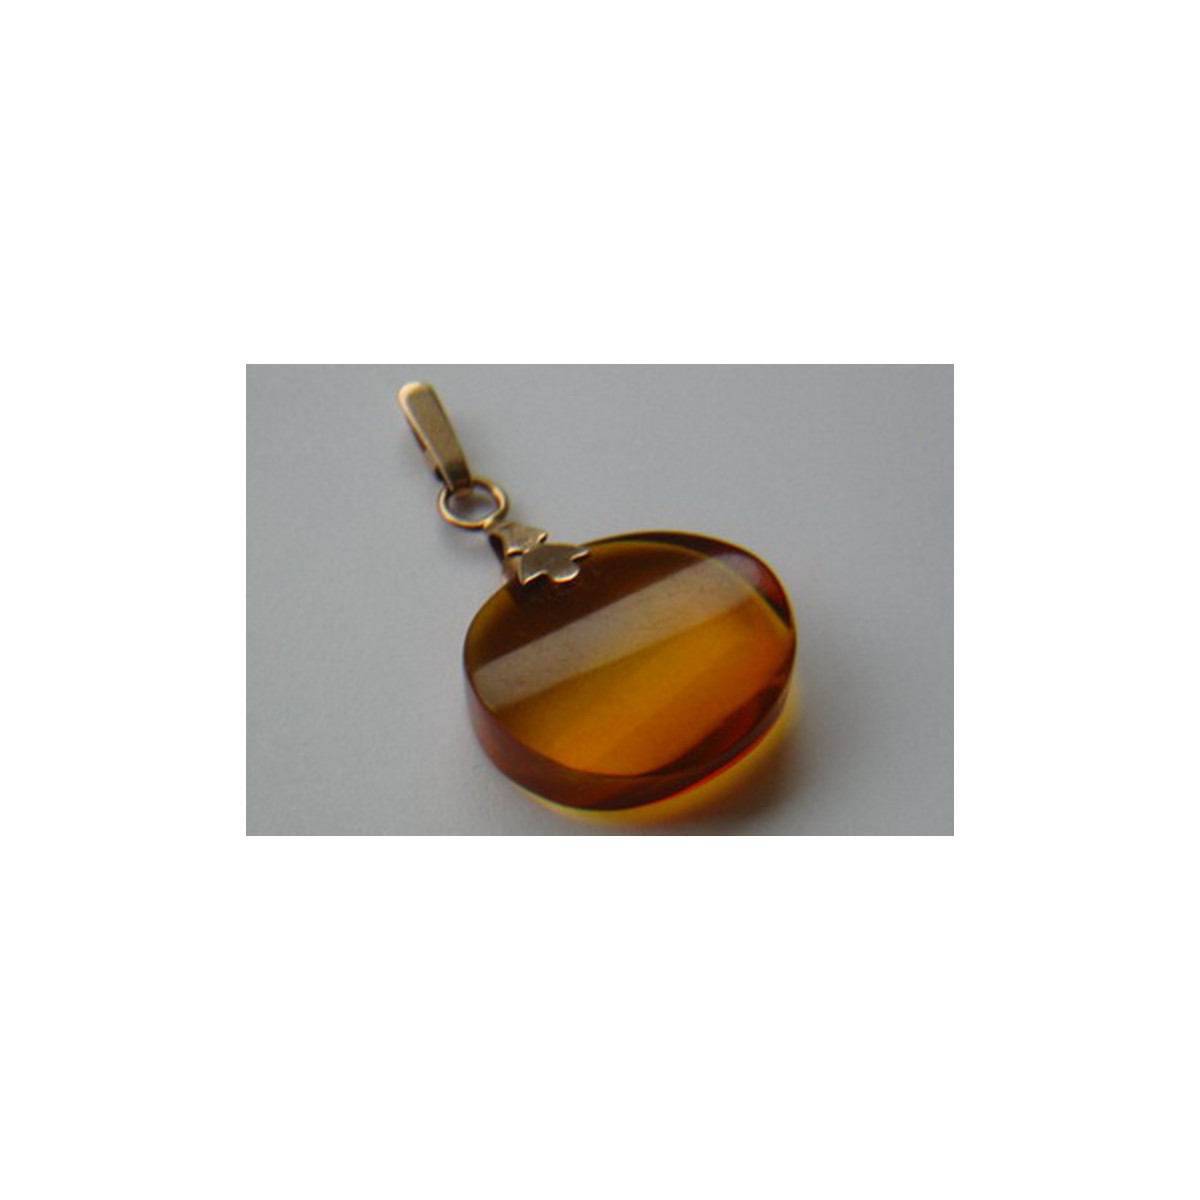 "Genuine Amber Encased in 14K Vintage Rose Gold Pendant" vpab009